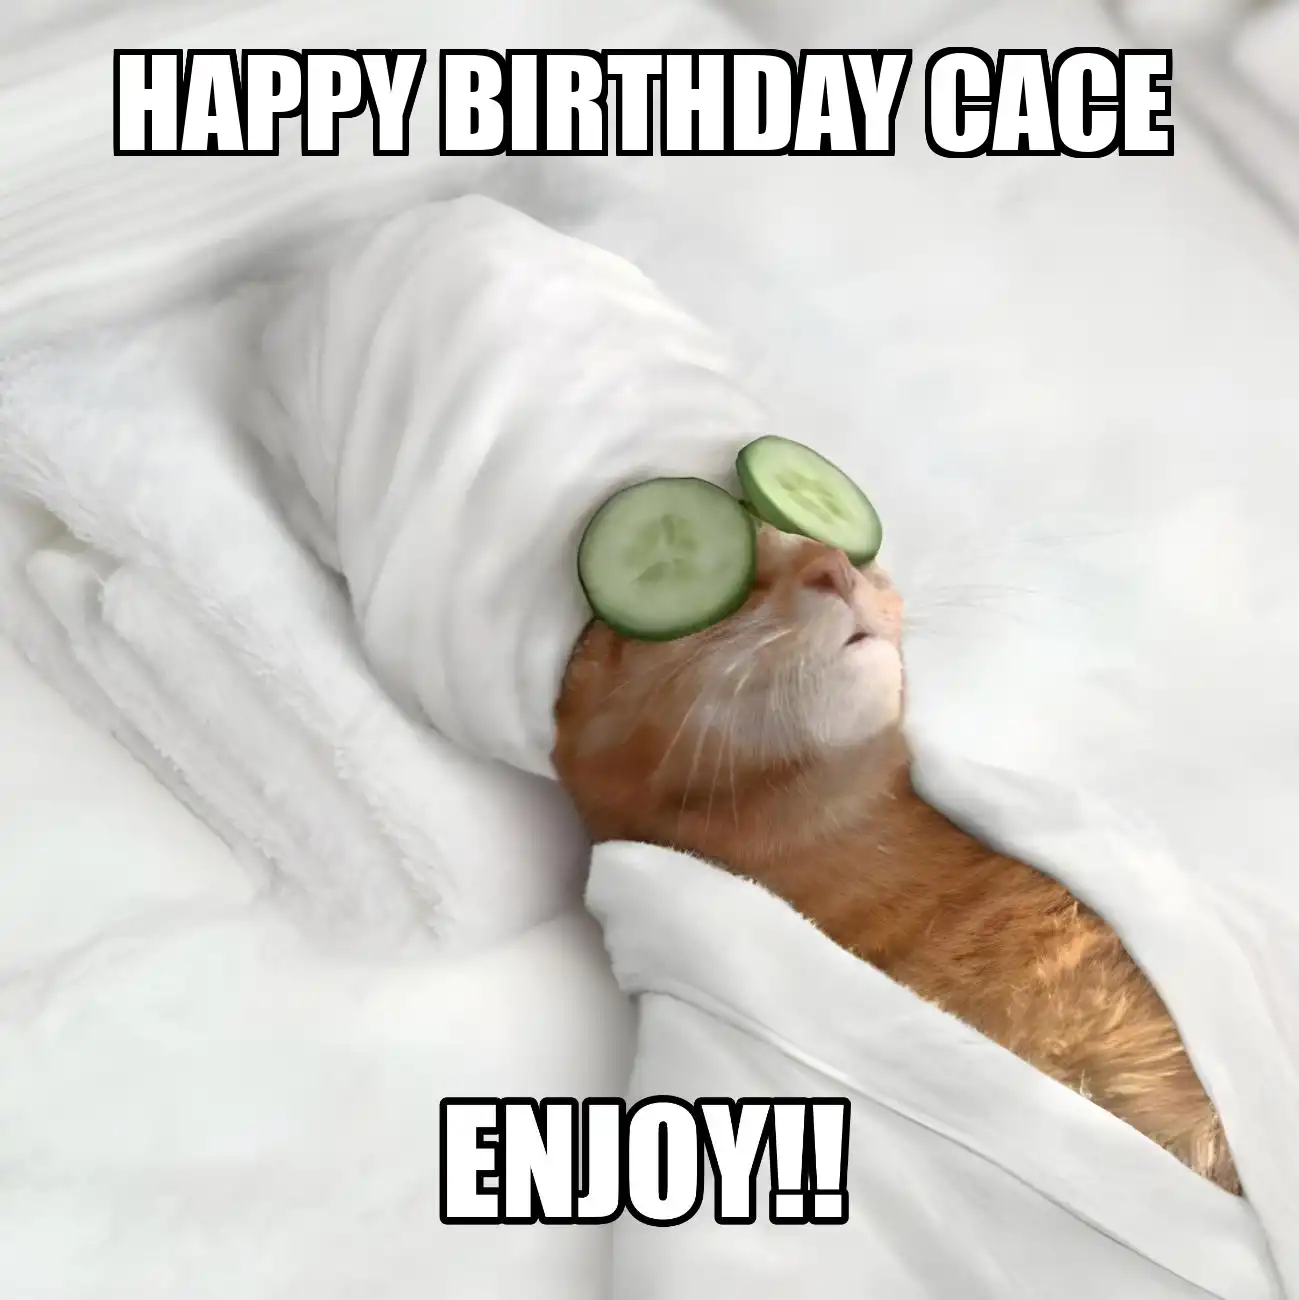 Happy Birthday Cace Enjoy Cat Meme